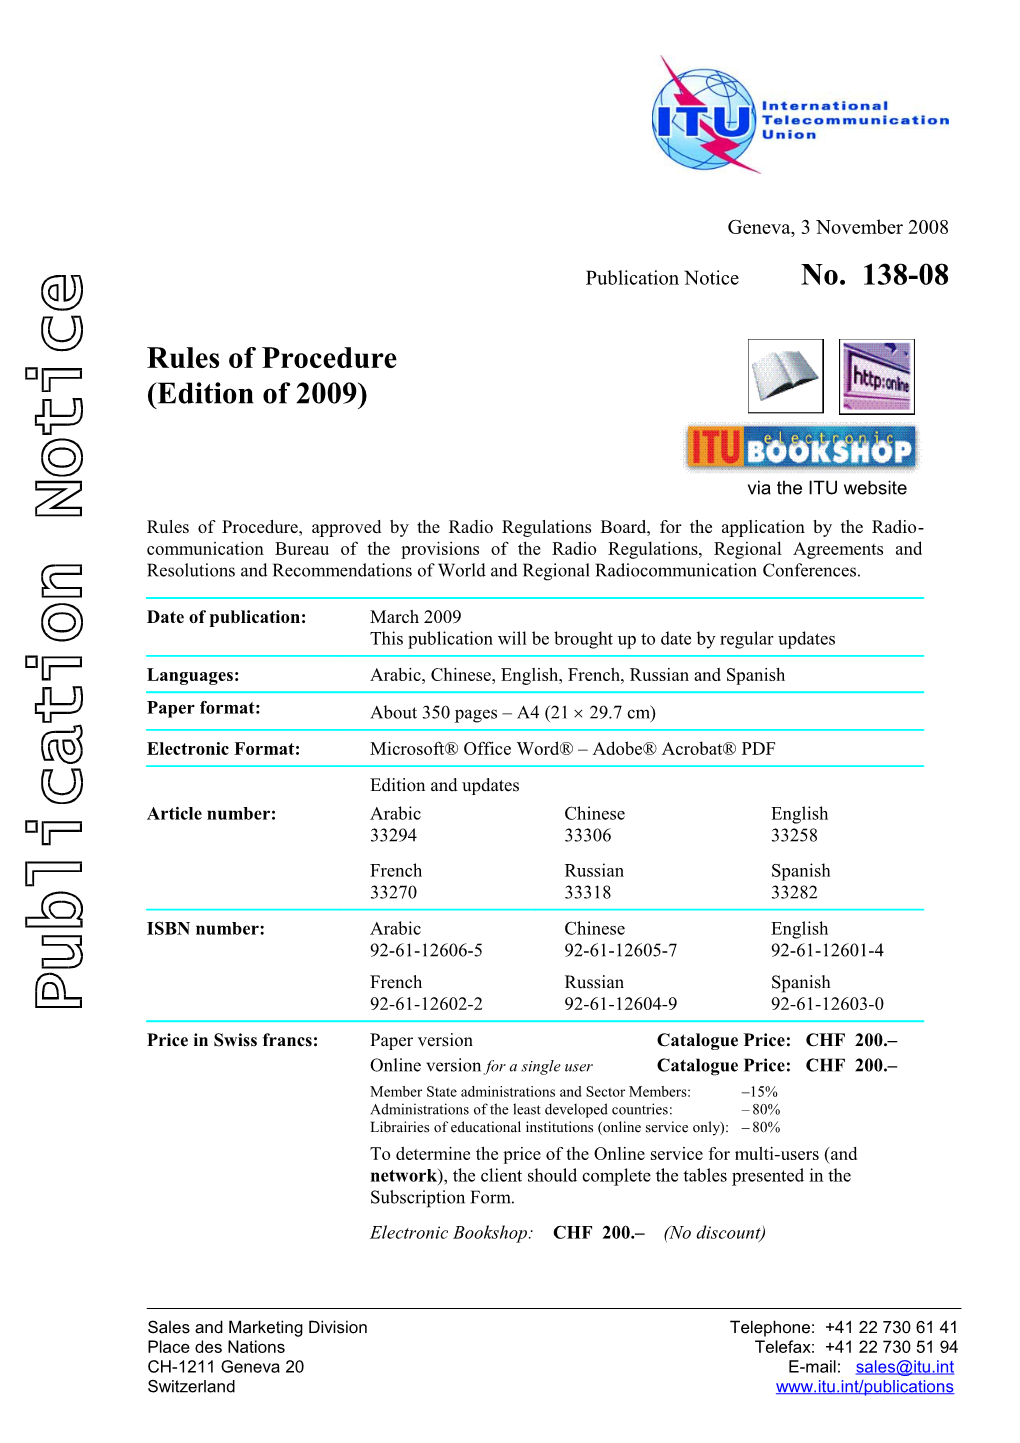 Publication Notice No. 138-08 Rules of Procedure (2009 Edition)